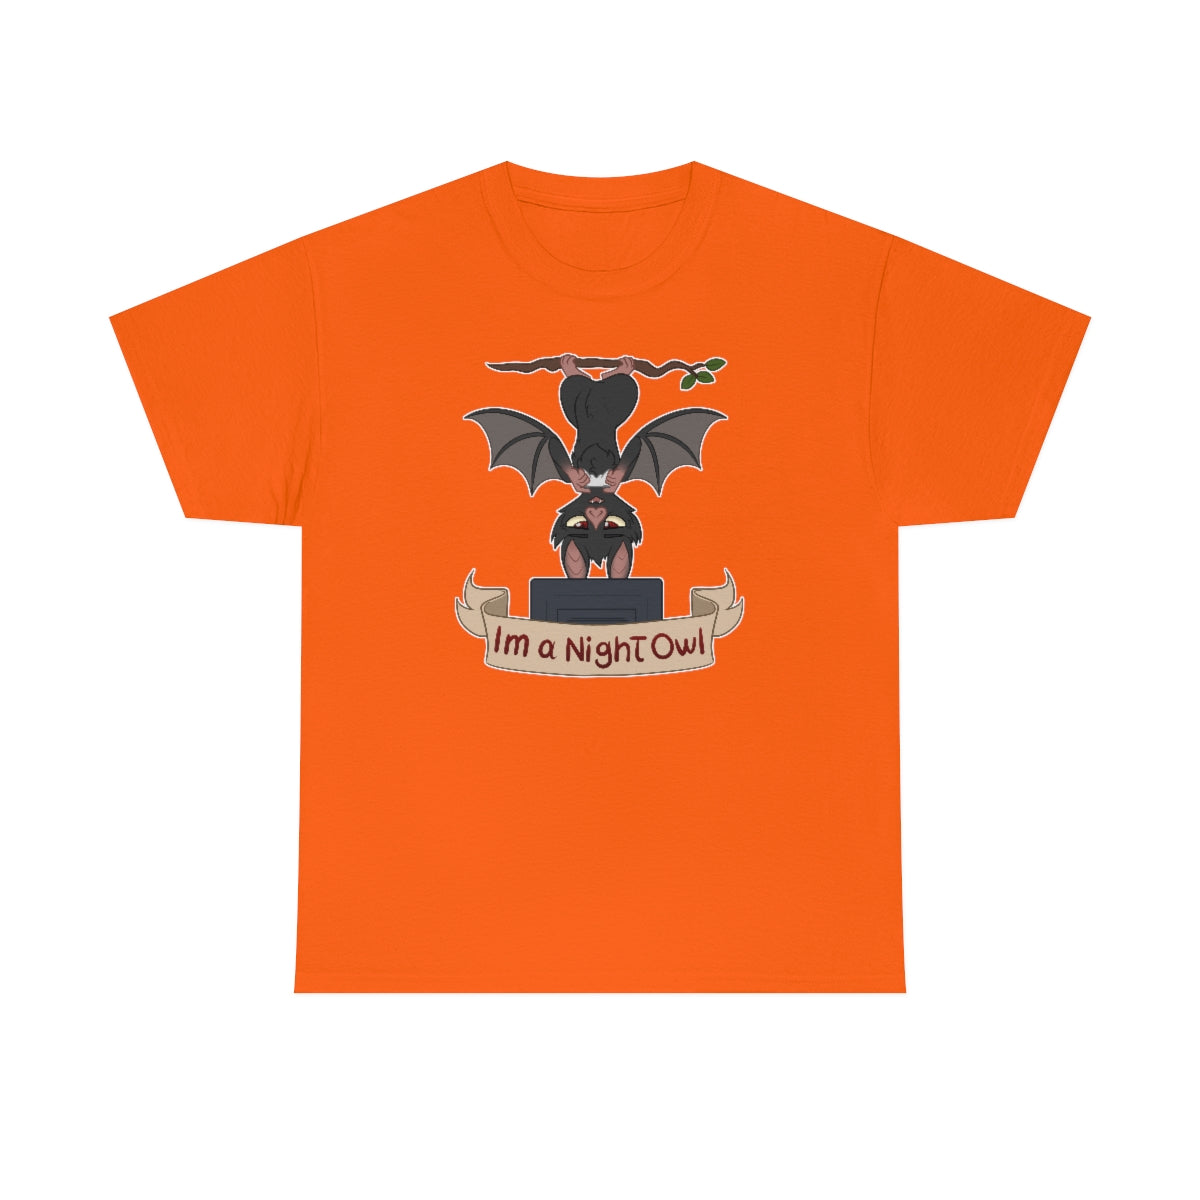 I am a Night Owl - T-Shirt T-Shirt Artworktee Orange S 